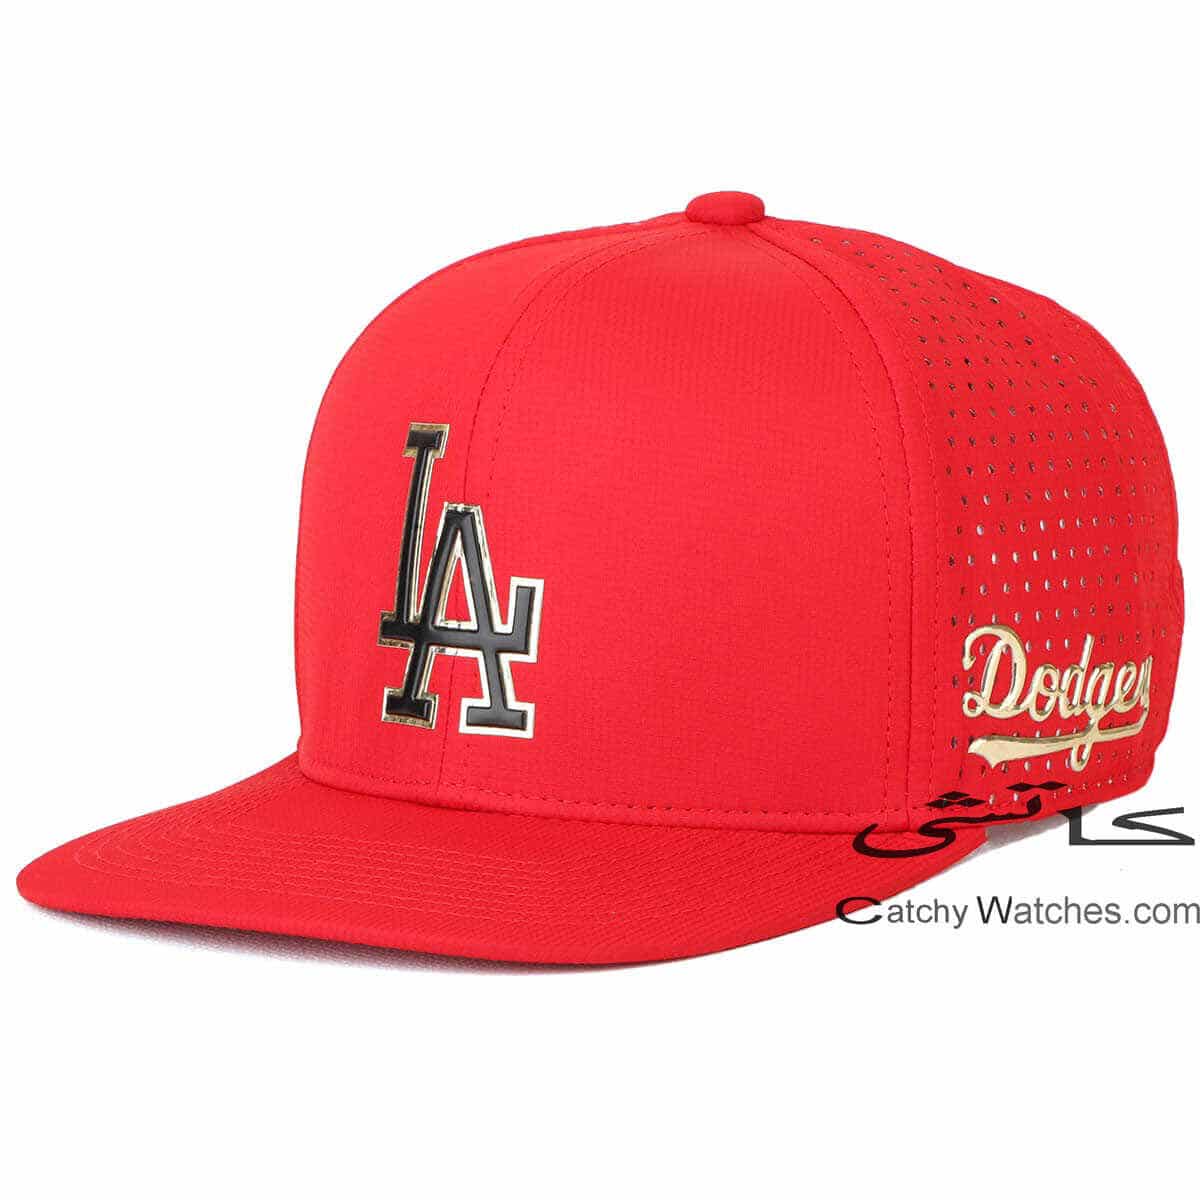 Dodgers-la-los-angeles-red-snapback-cotton-flat-hip-hop-cap